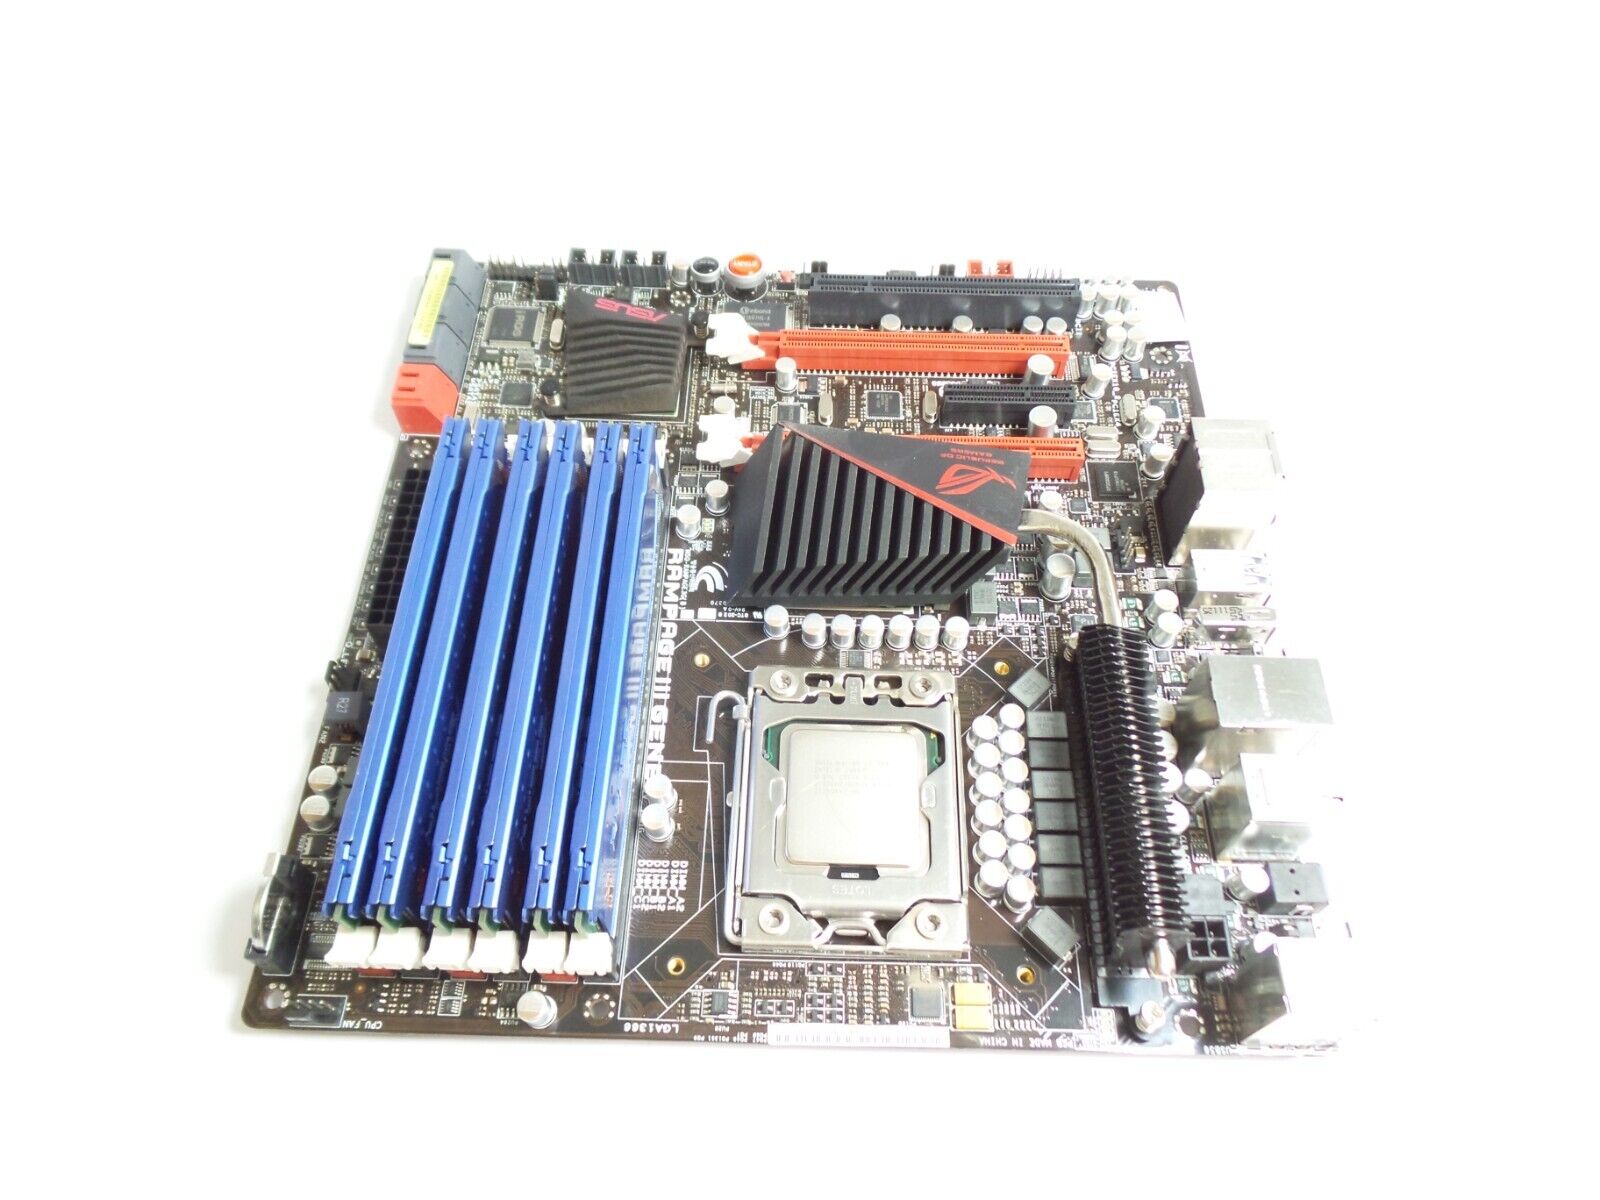 ASUS Rampage III GENE LGA1366 Socket Intel Motherboard w/ i7 980 CPU 24gb Ram